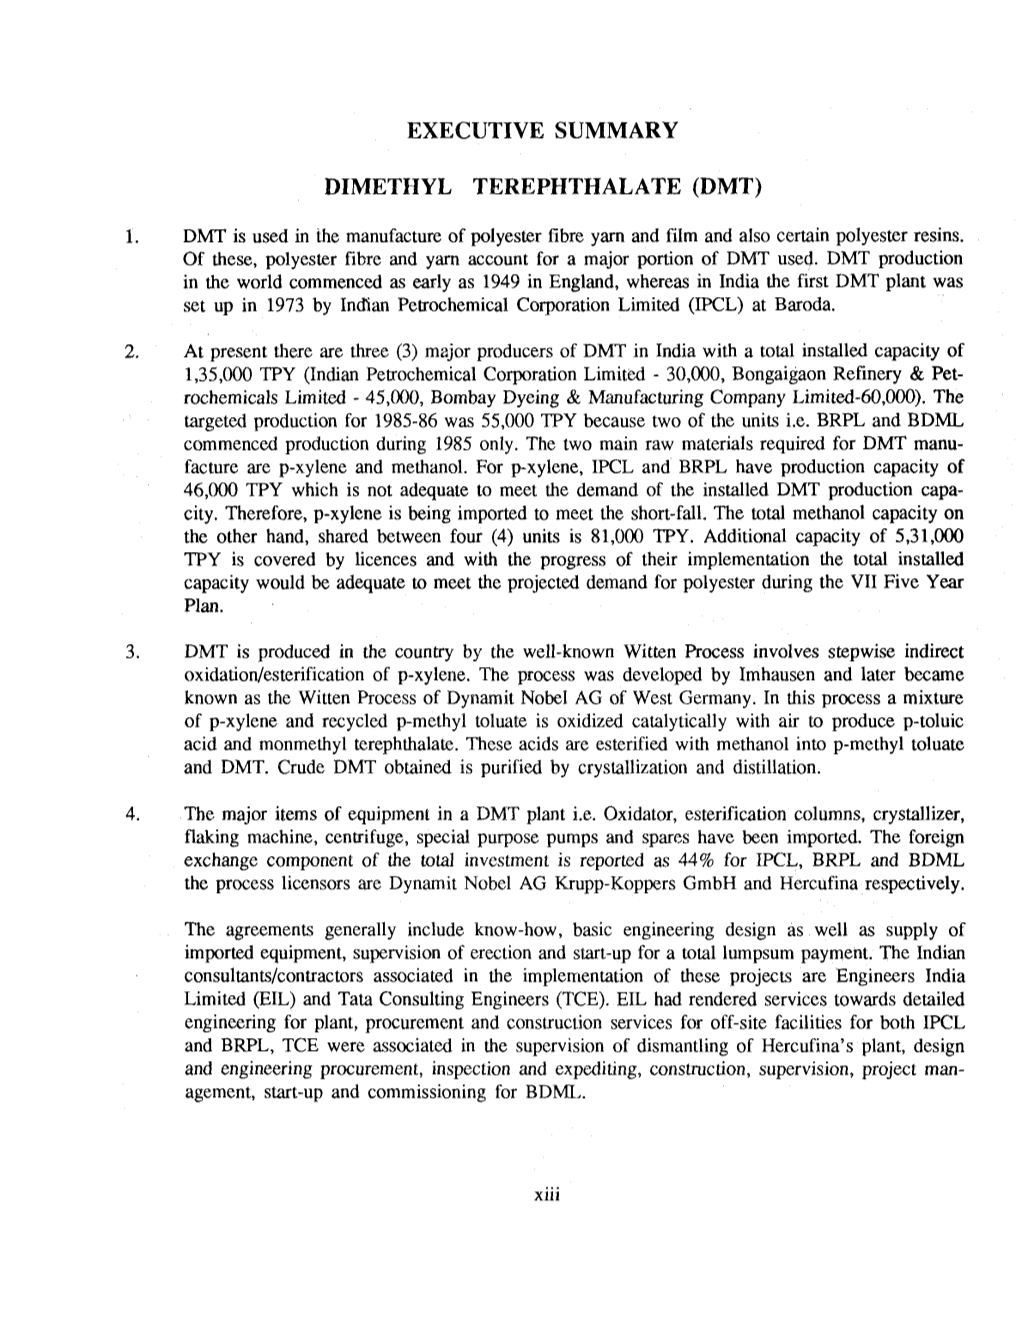 Executive Summary Dimethyl Terephthalate (Dmt)